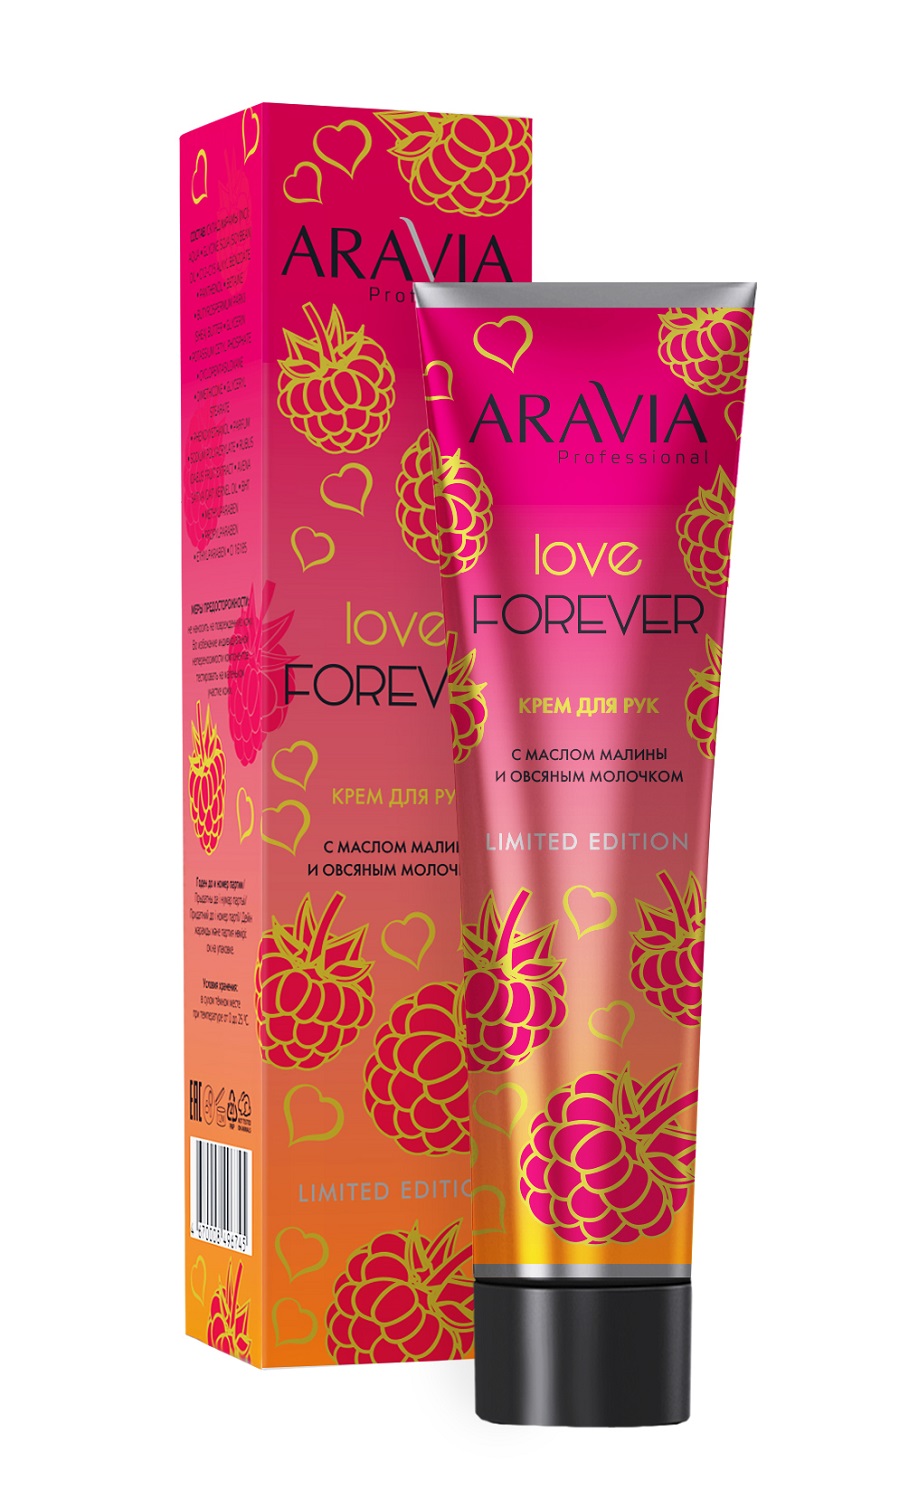 Aravia Professional Крем для рук Love Forever с маслом малин